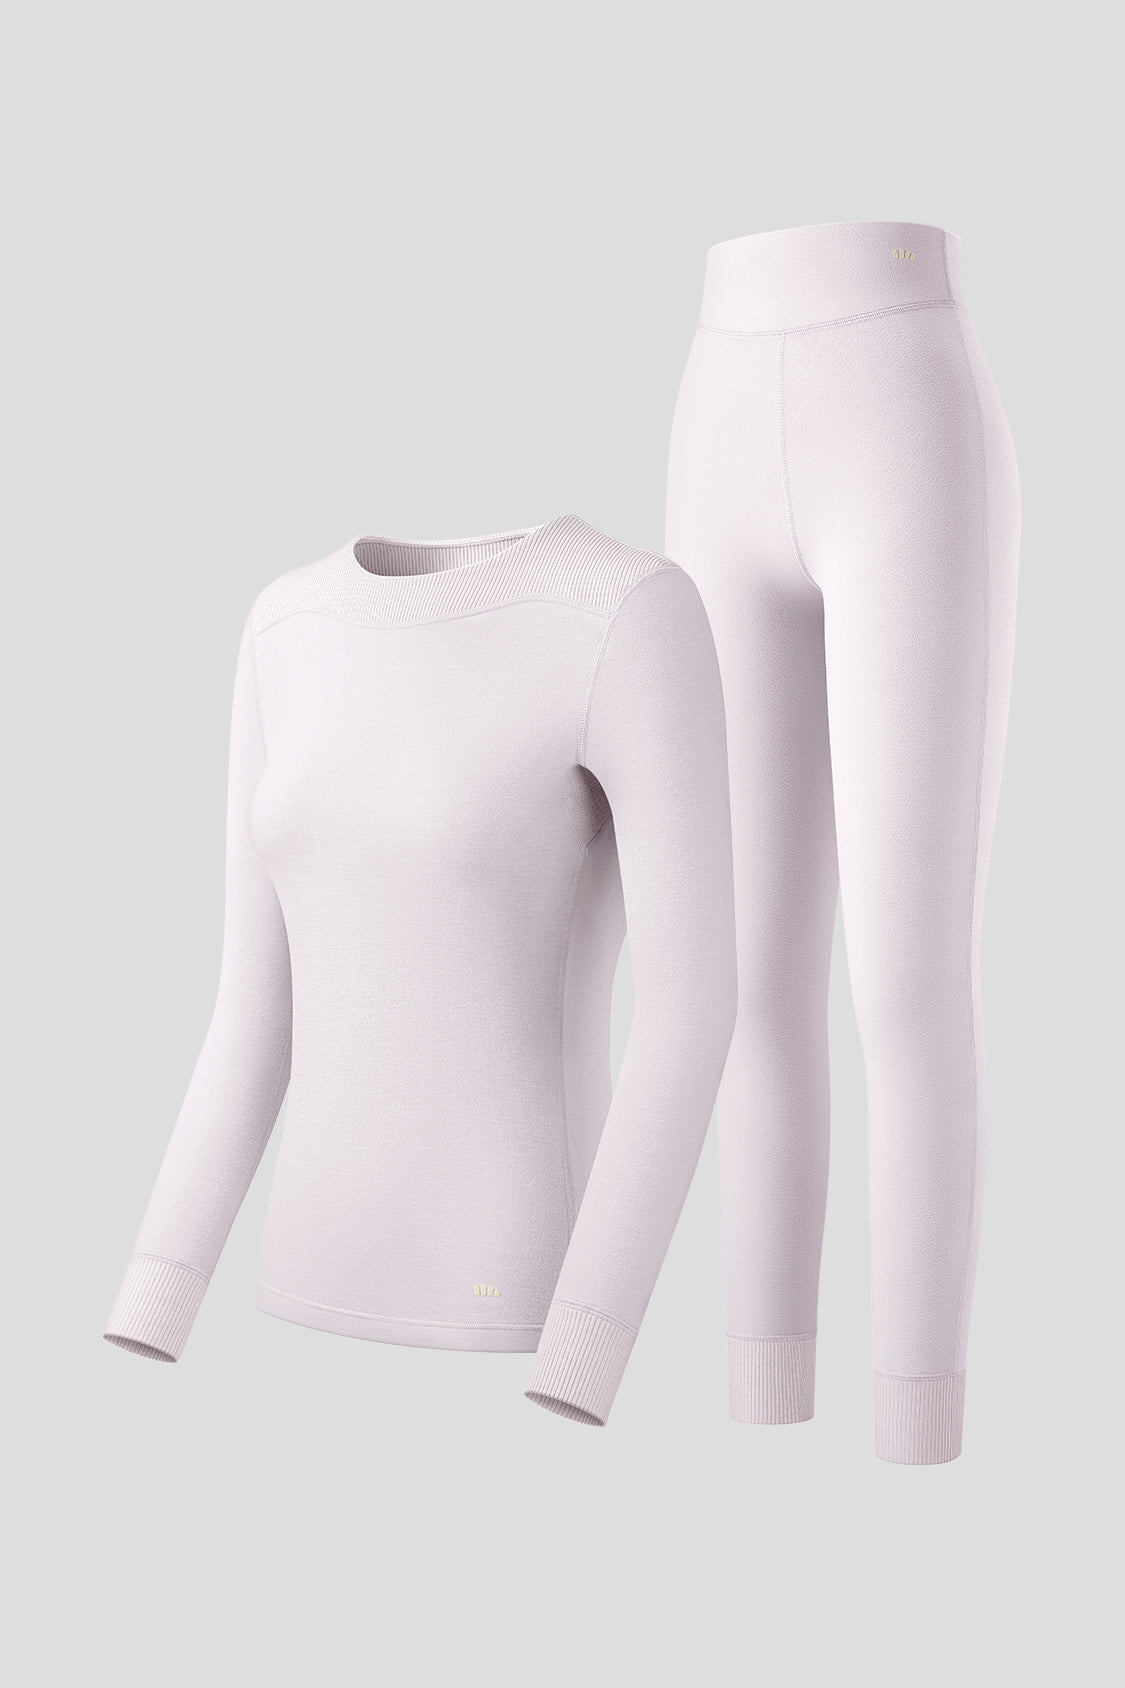 Buy Womens Winter Warm Inner Wear Thermal Long Top Bottom Set Melange  Online @ ₹666 from ShopClues